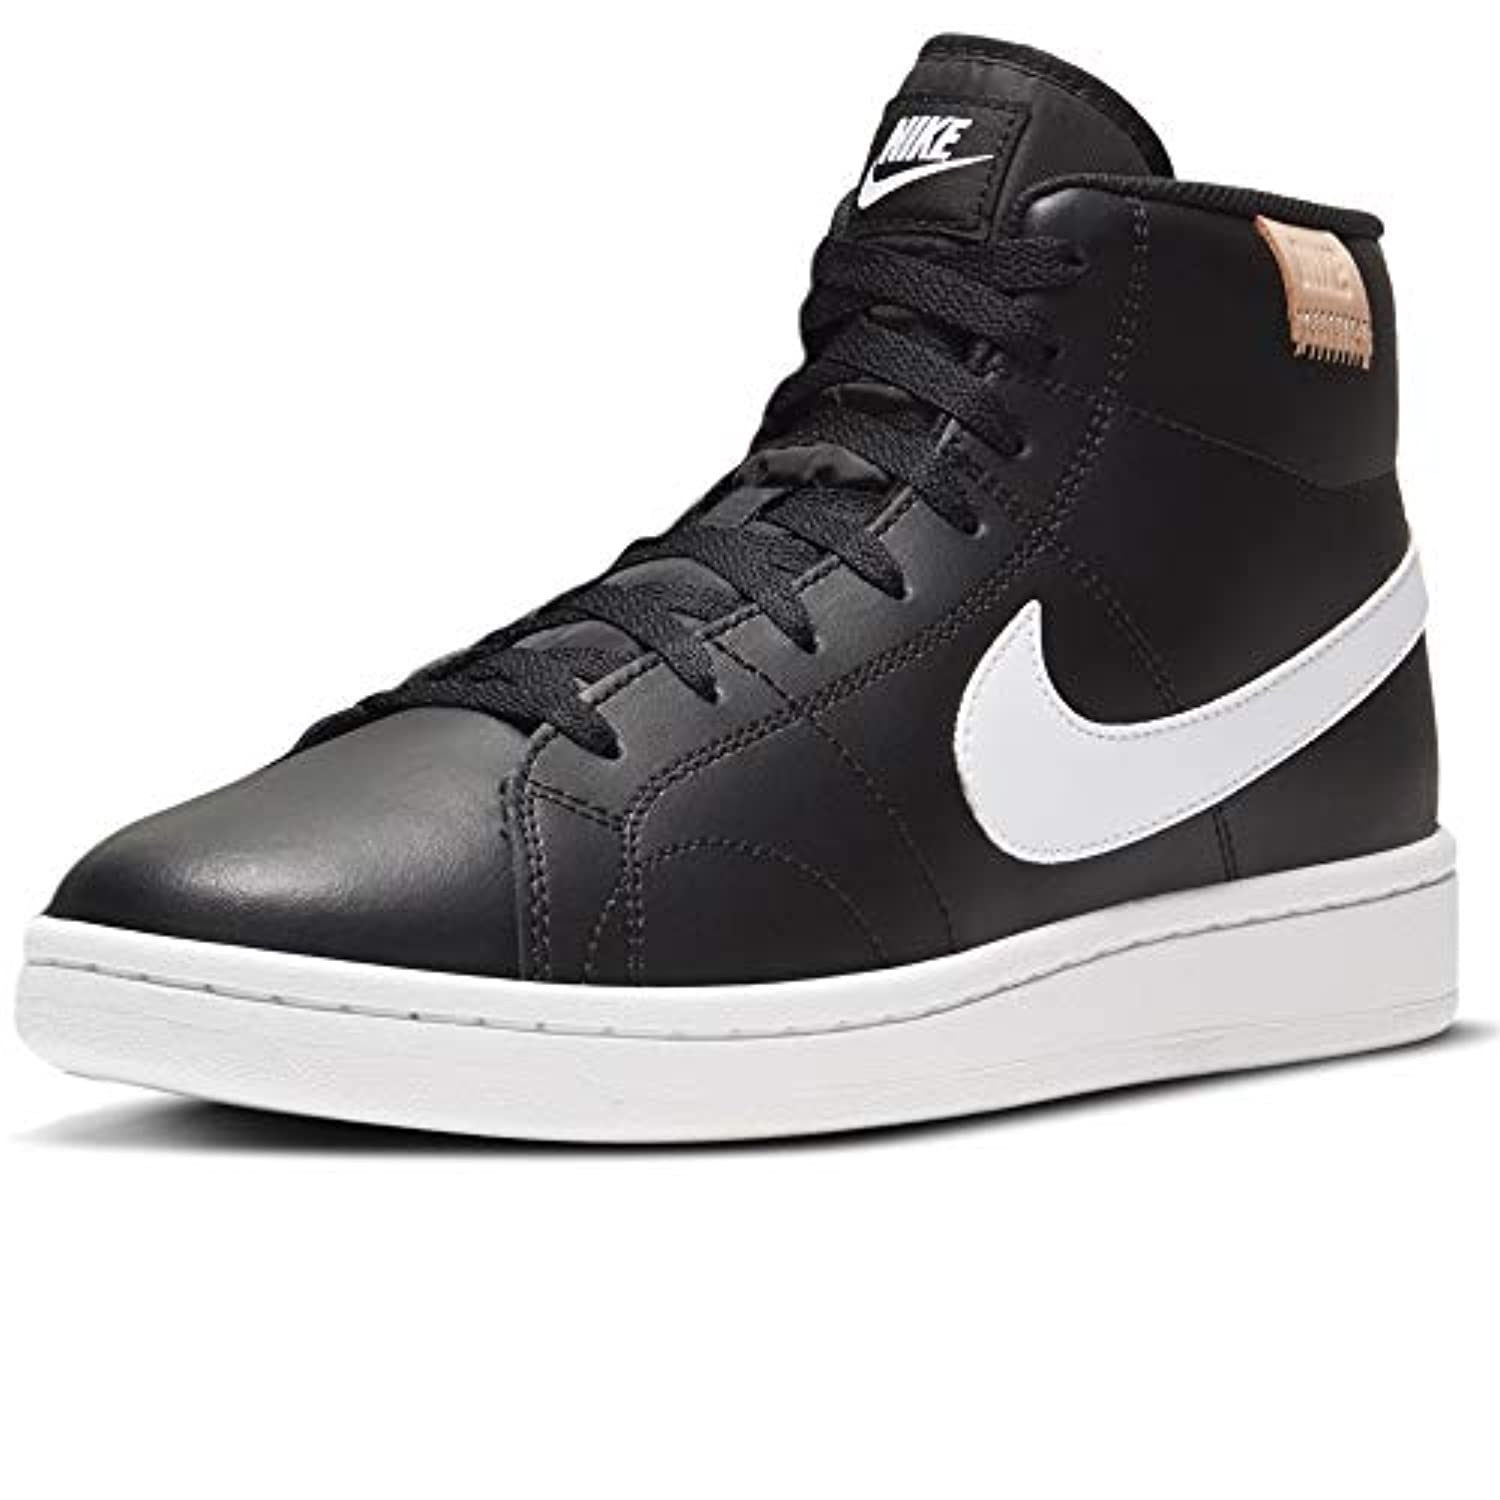 Nike Men's Tennis Shoe, Black White Onyx, US:7 - image 1 of 3